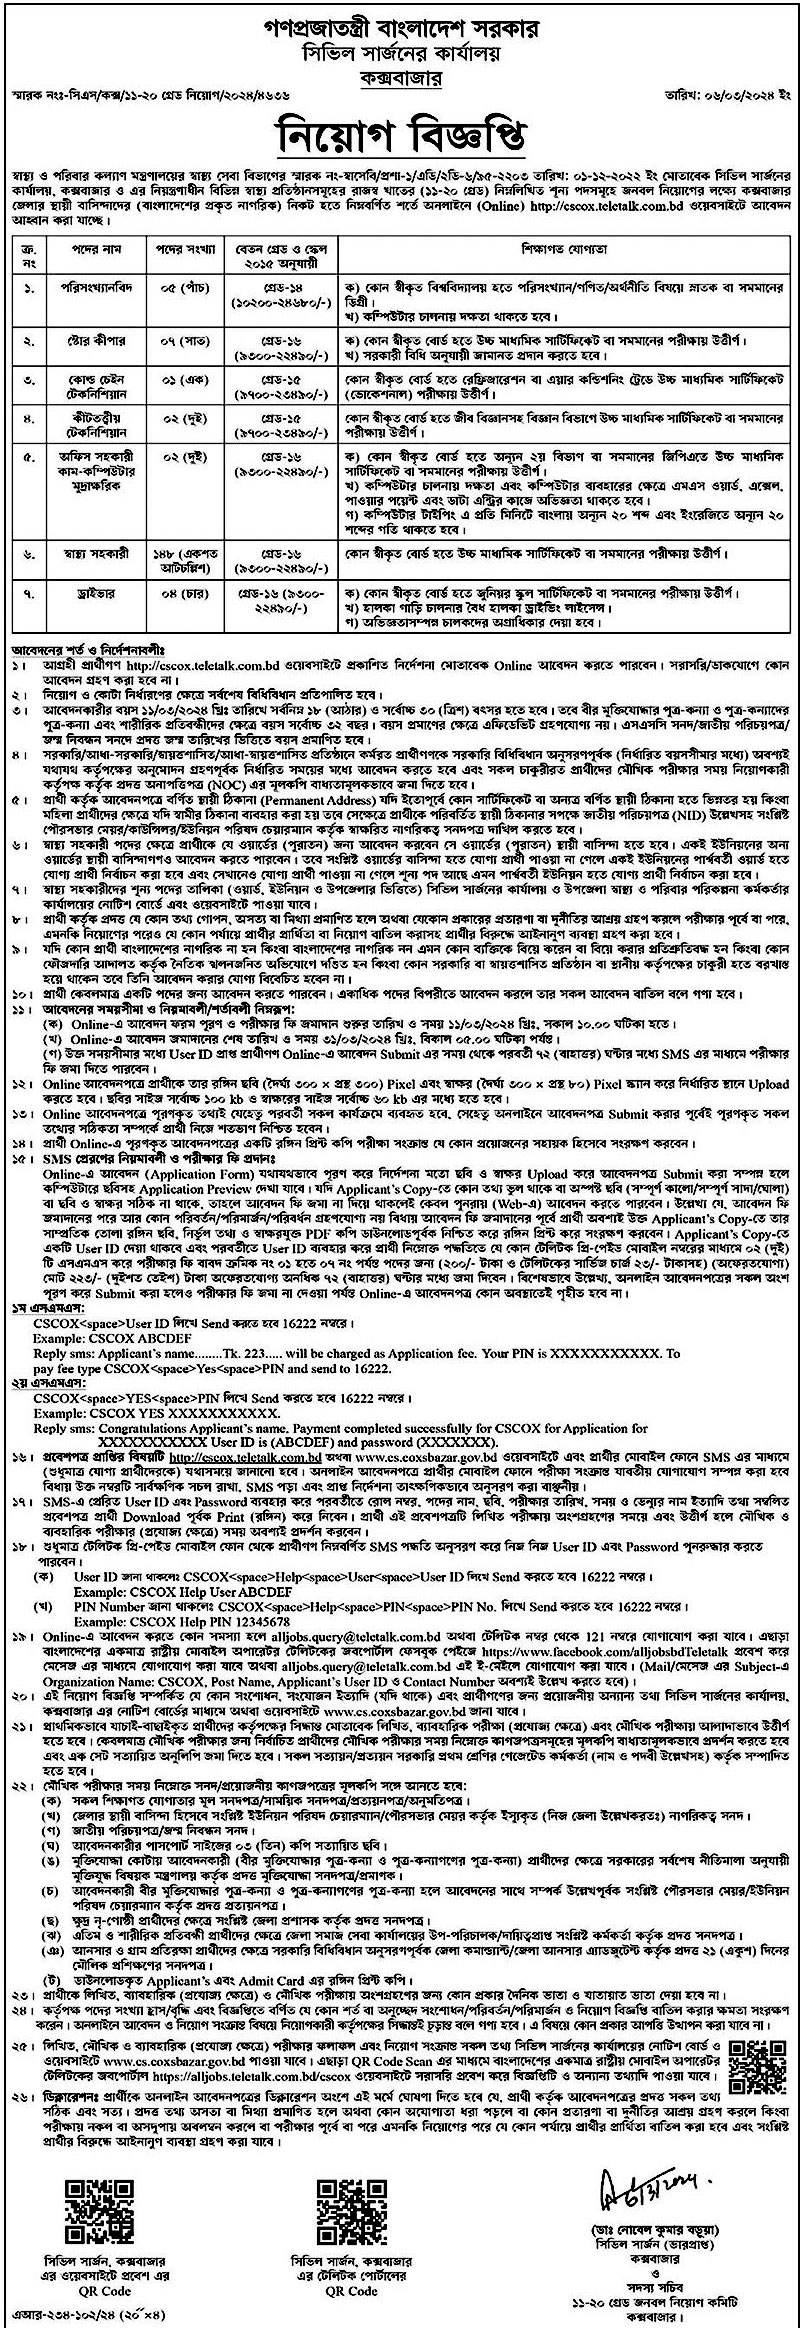 Civil Surgeon Office CSO Job Notice